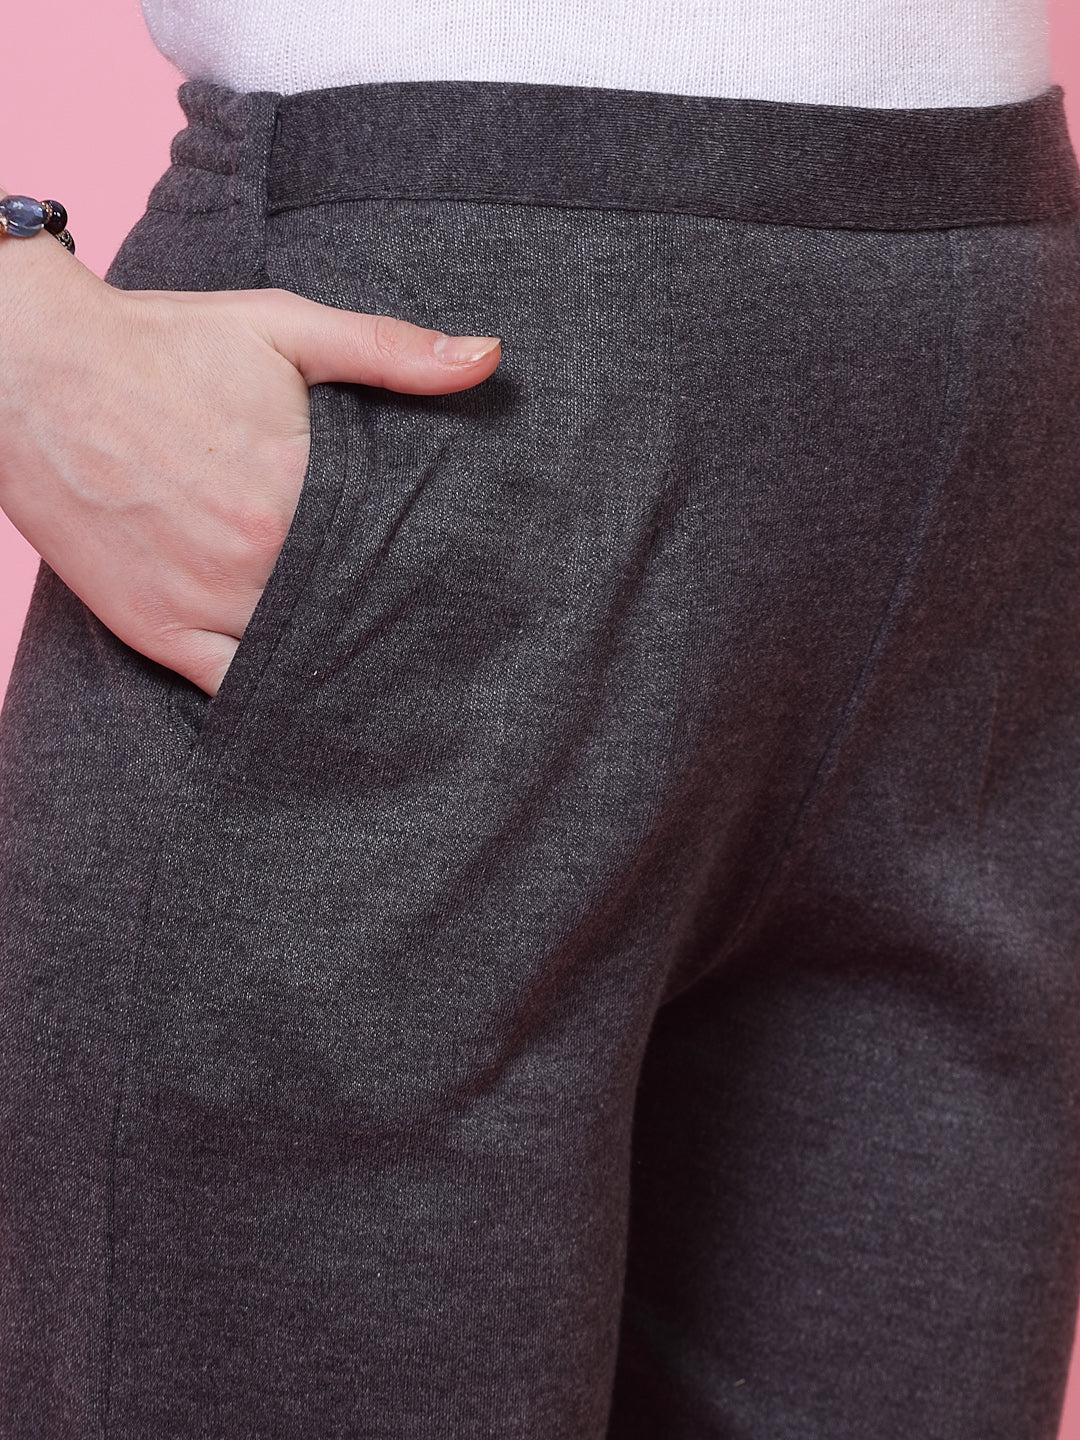 Dark Grey & Light Fawn Solid Woollen Trouser (Pack of 2)